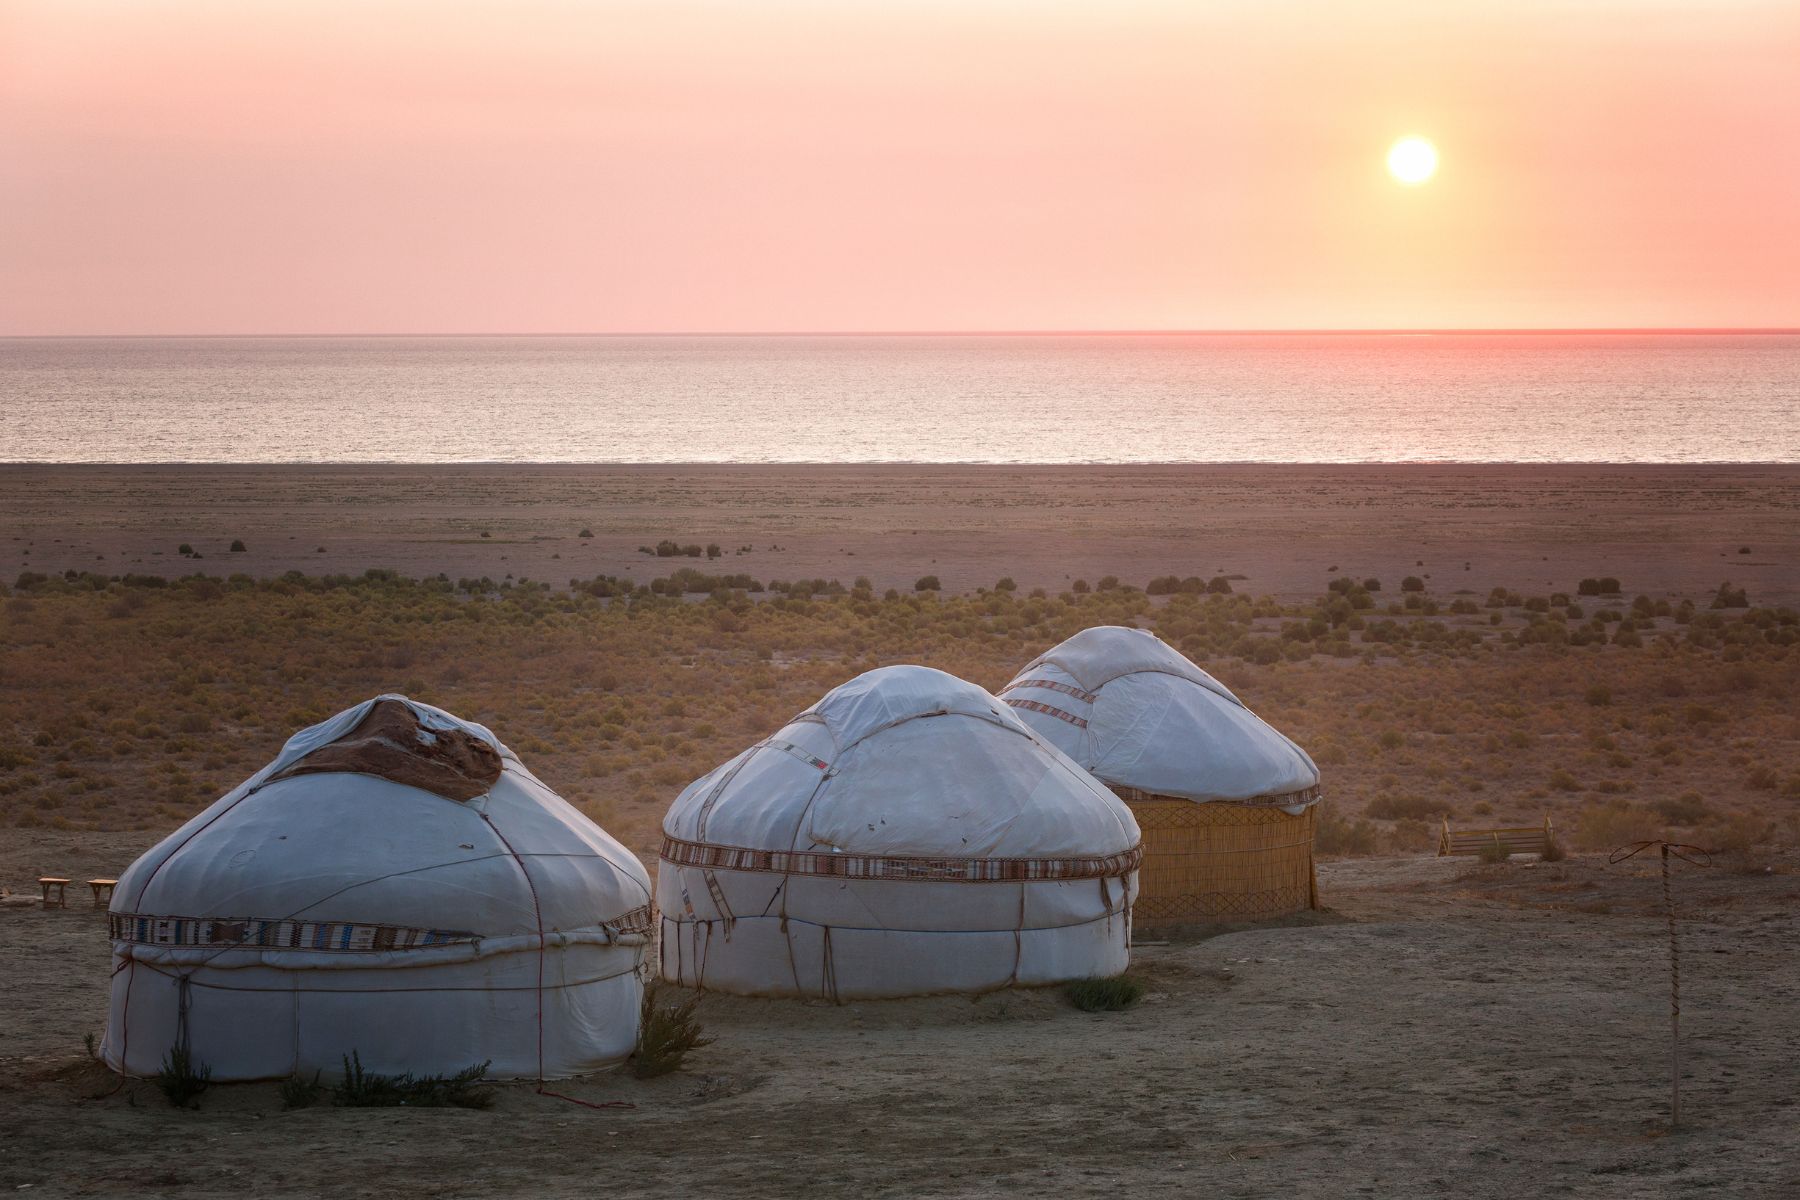 The sun setting on the Aral Sea with three yurts in the foreground, Karakalpakstan